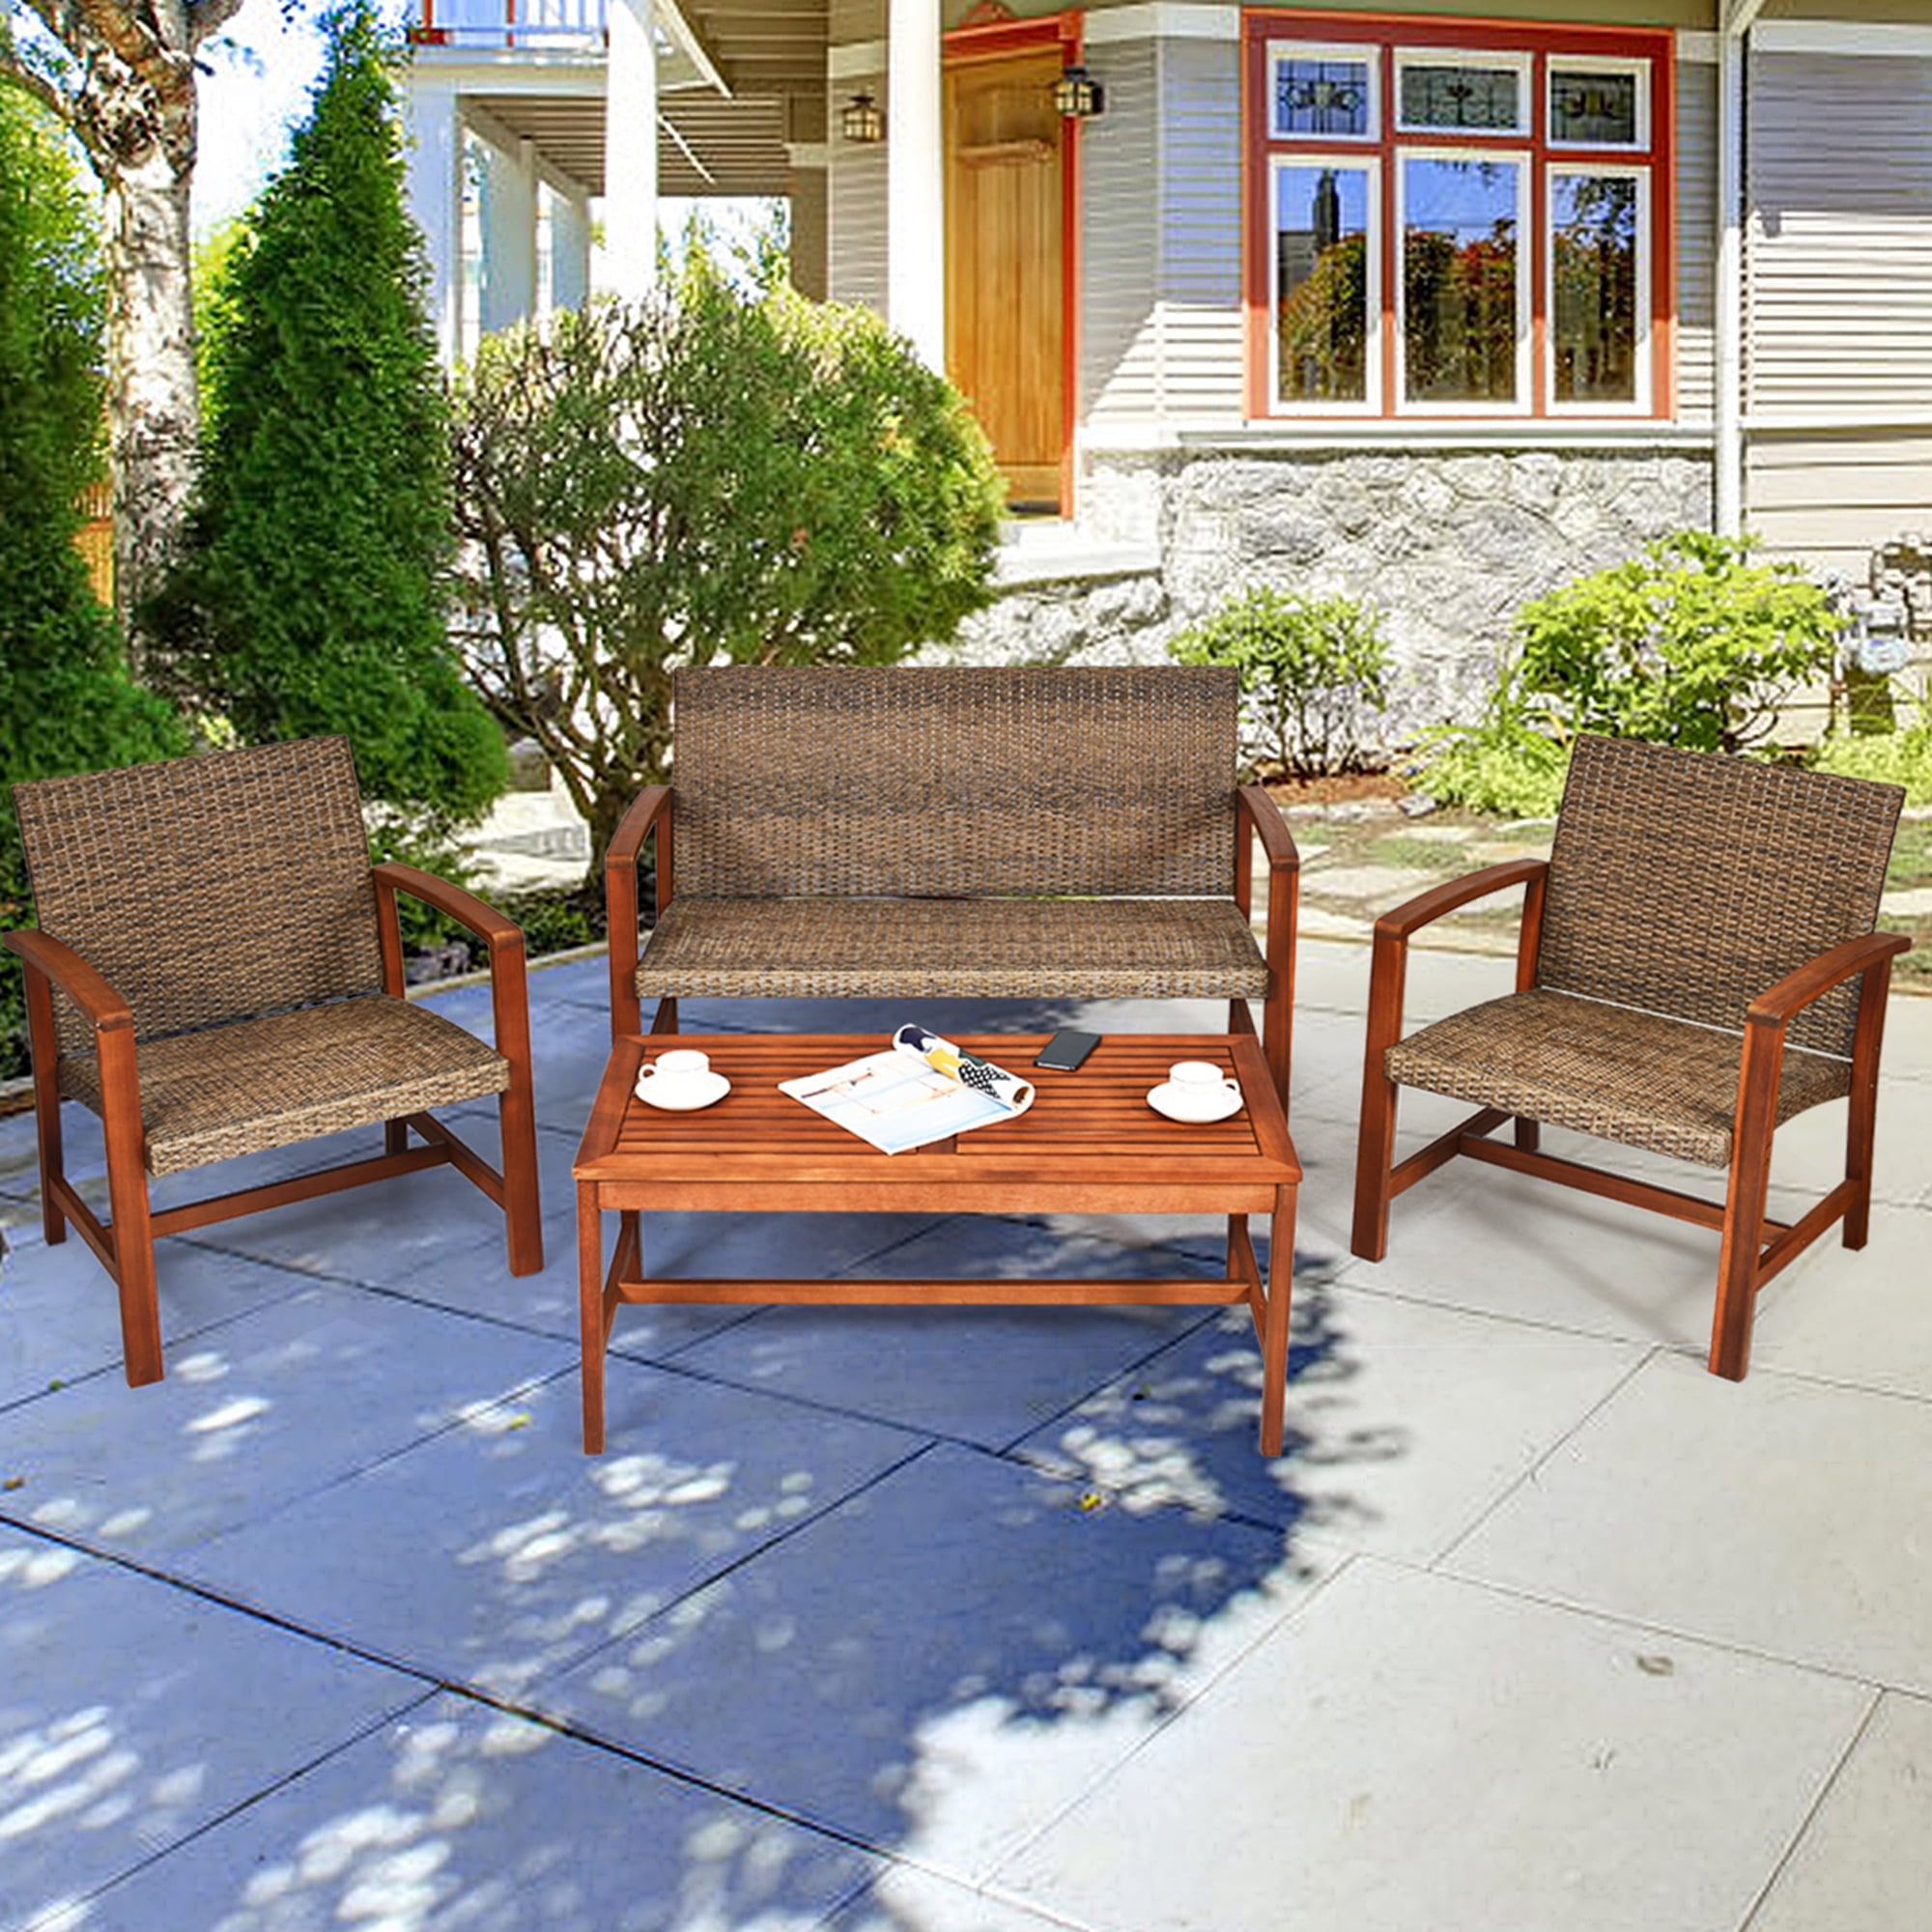 gymax 4pcs patio conversation set outdoor furniture set w/ acacia wood